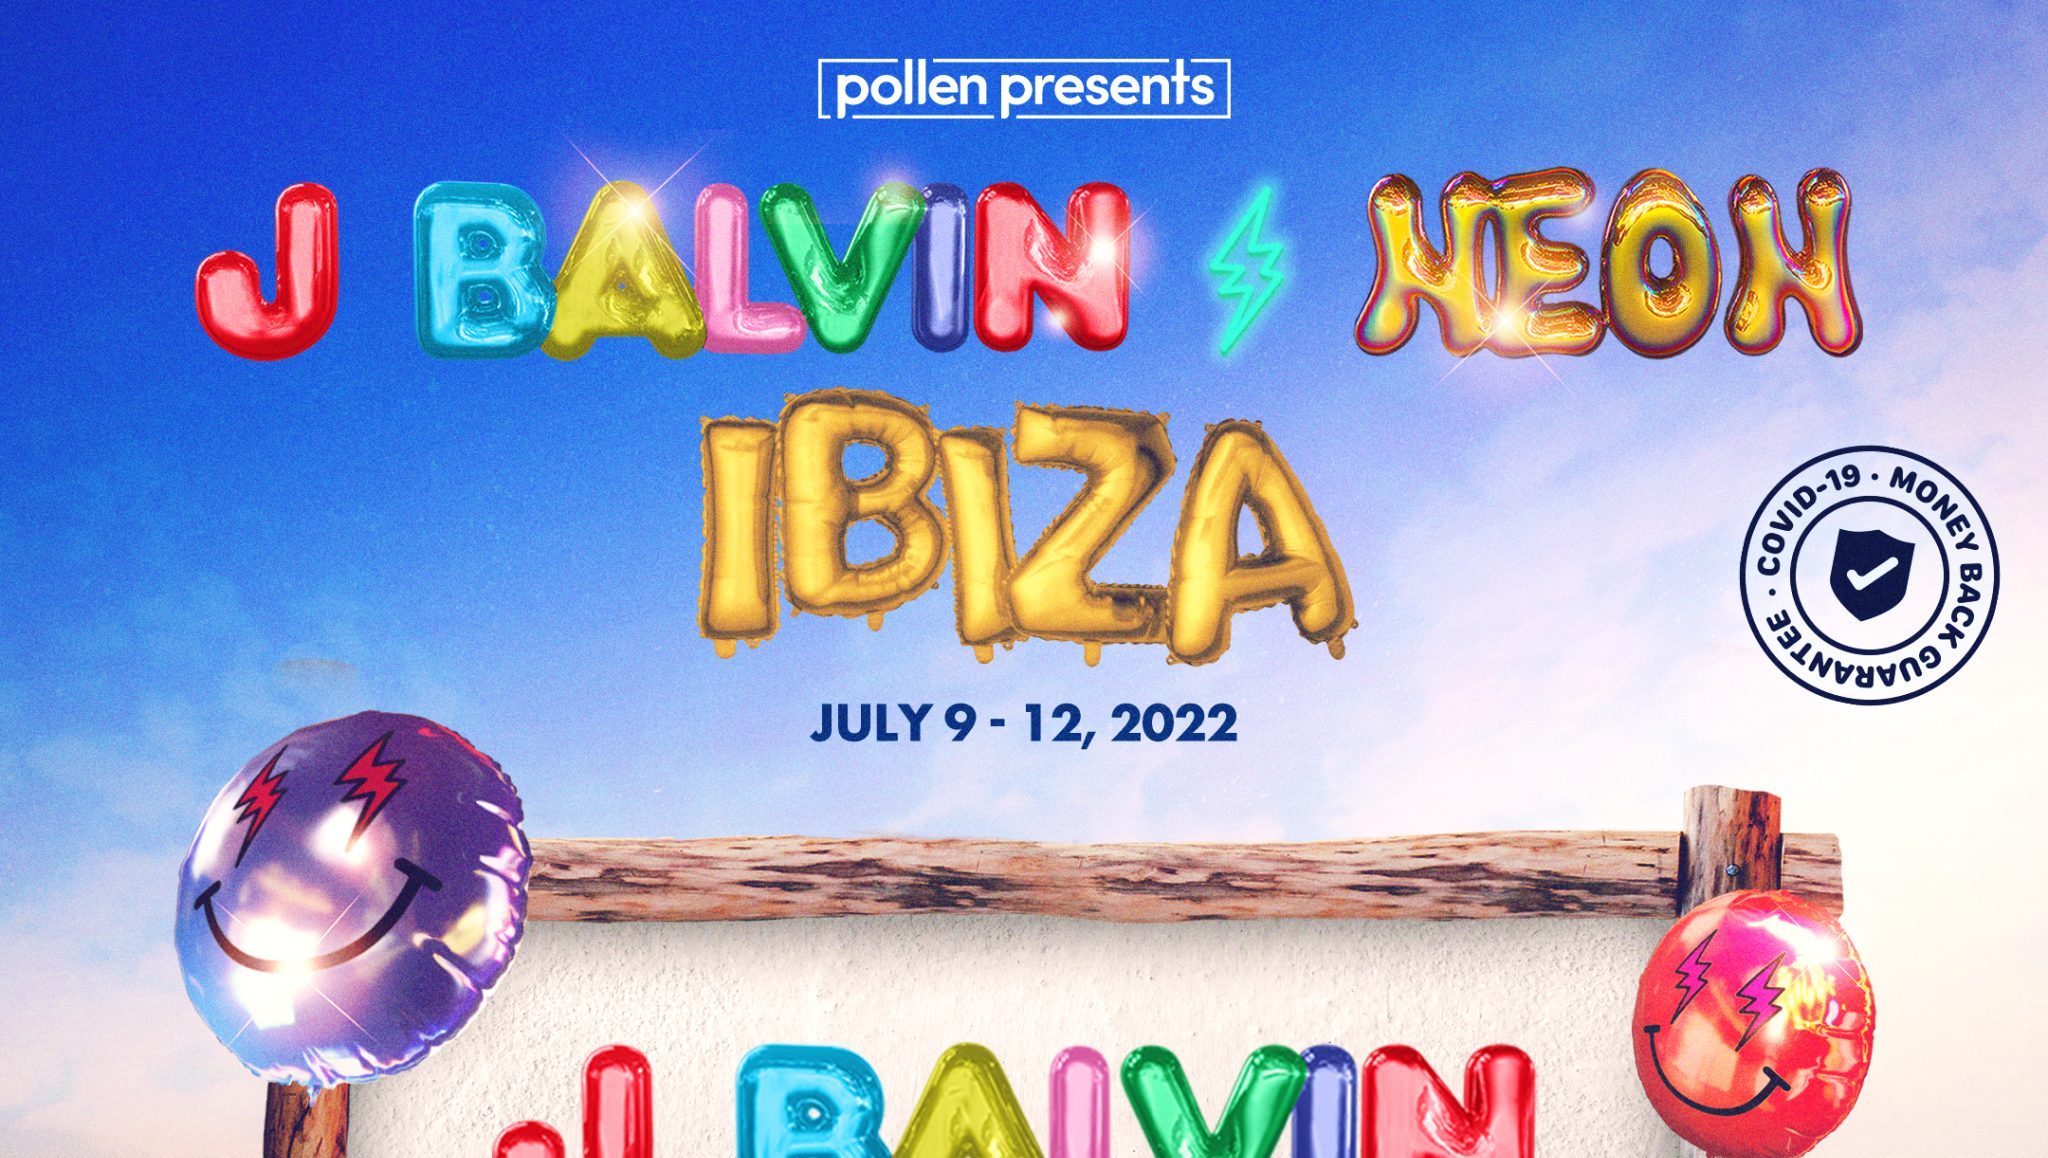 Colombian singer J Balvin on adventurous style and social media